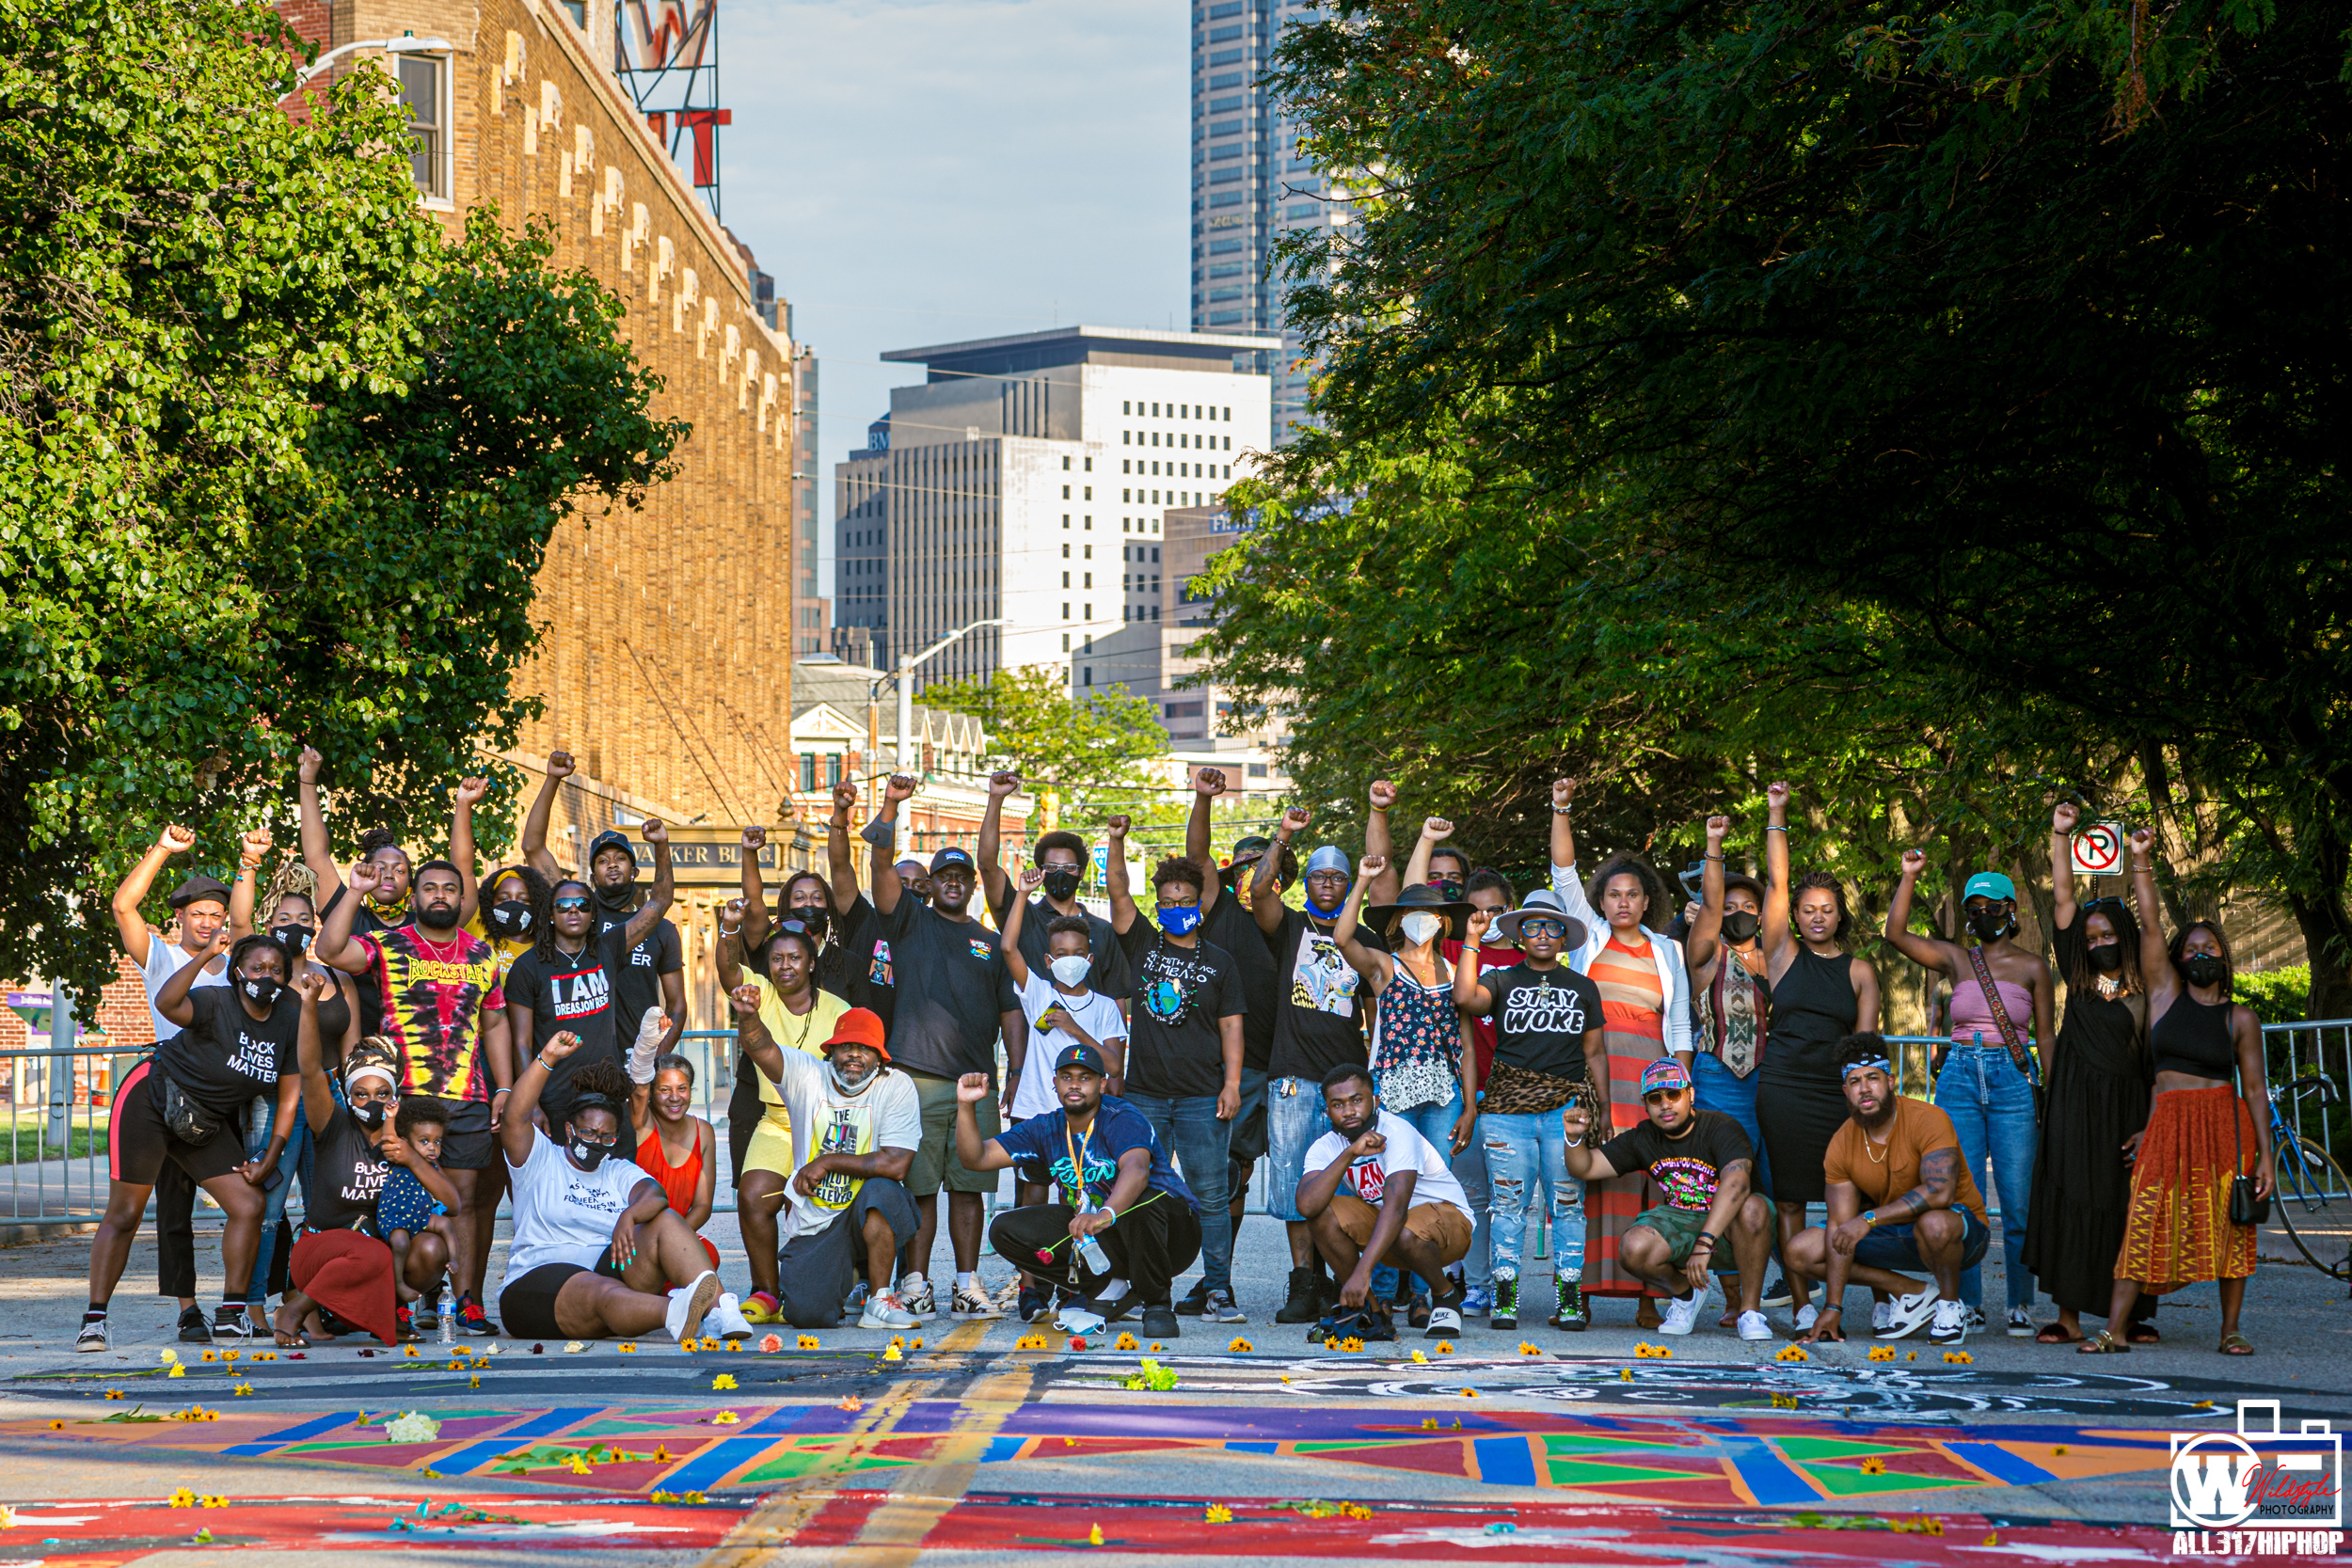 Indiana Avenue Black Lives Matter Mural